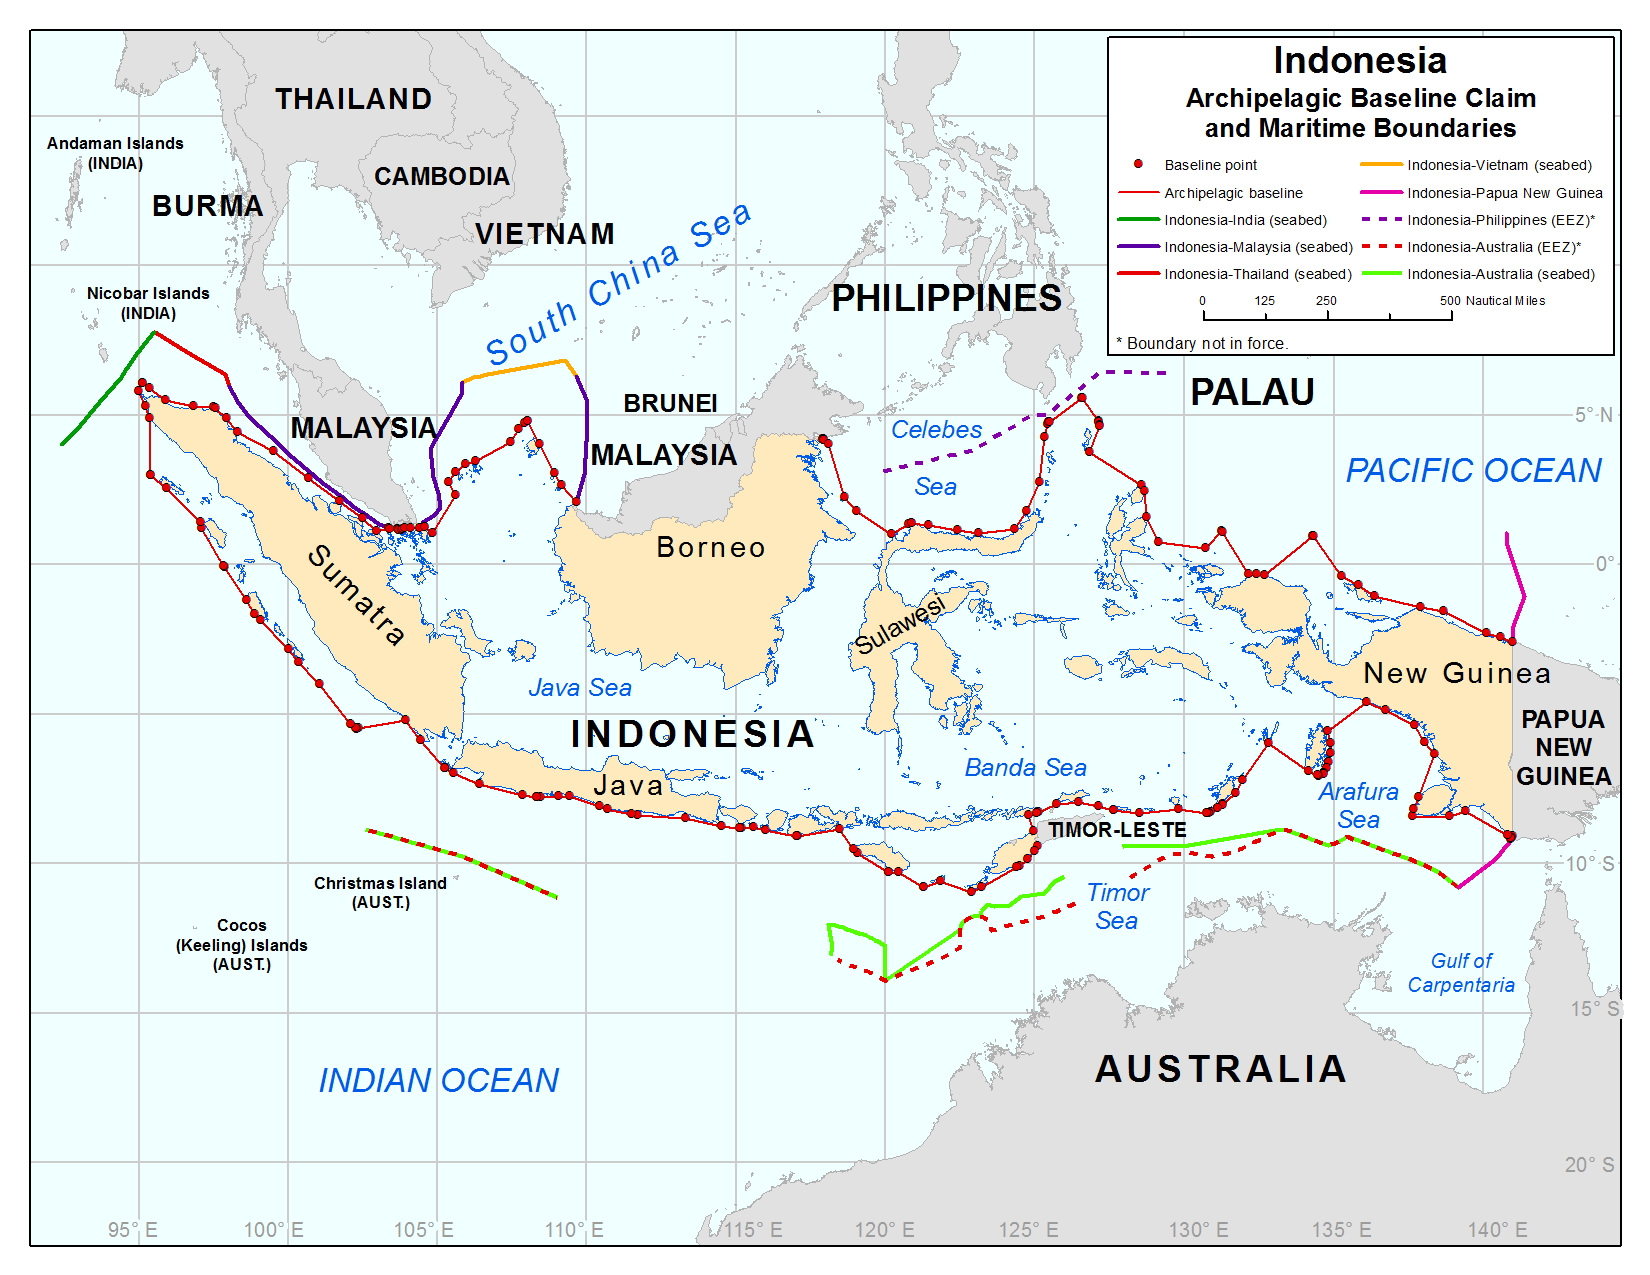 Indonesia maritime claim about Archipelagic Baselines